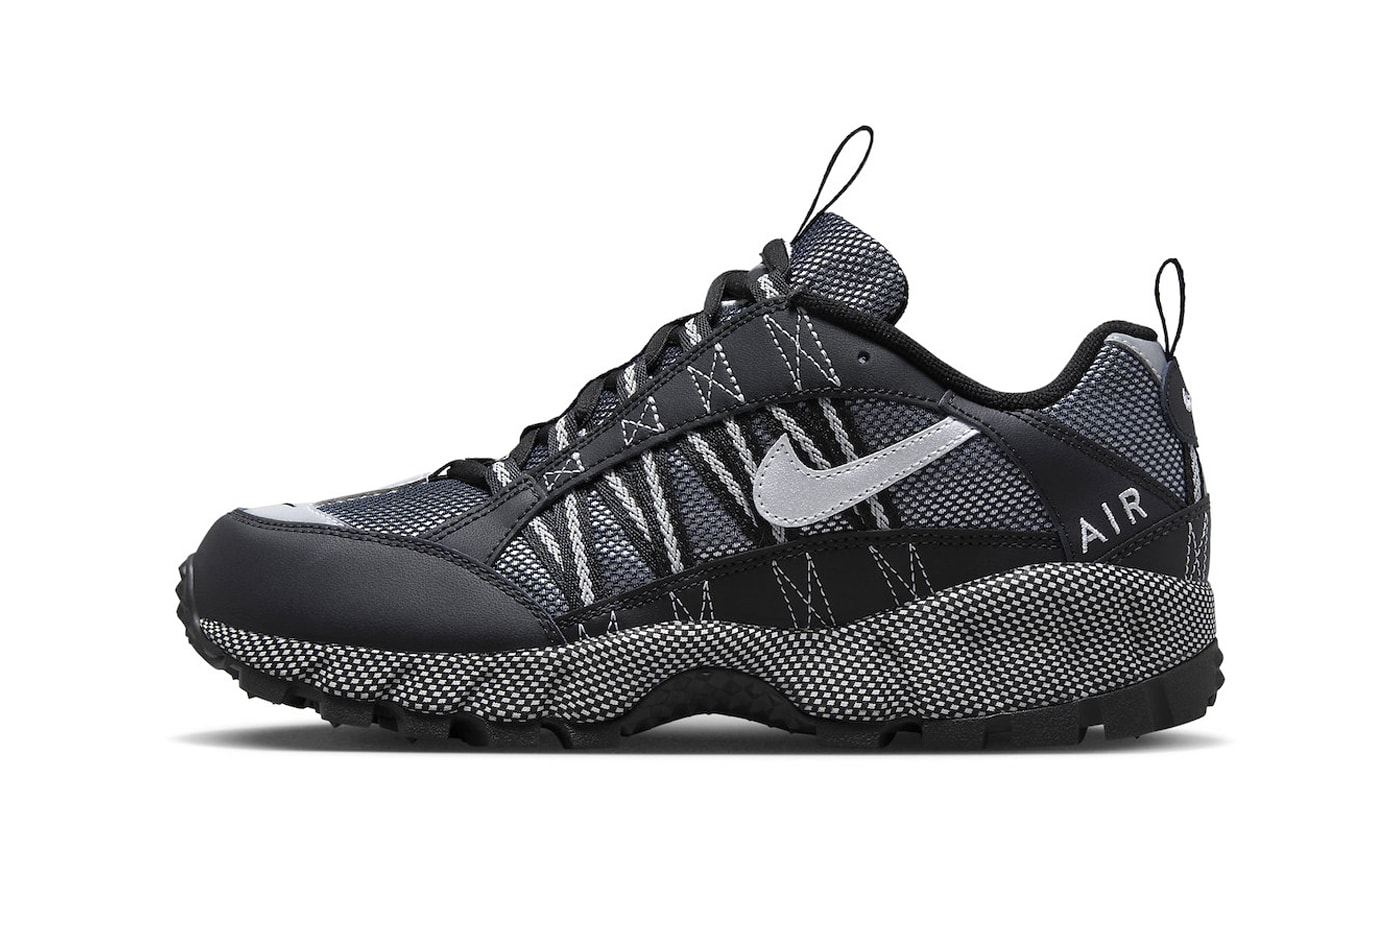 Nike Air Humara Arrives in "Black Metallic" Release Info FJ7098-002 Black/Metallic Silver-Metallic Silver swoosh hiking shoes sneakers outdoor trail shoe peter fogg